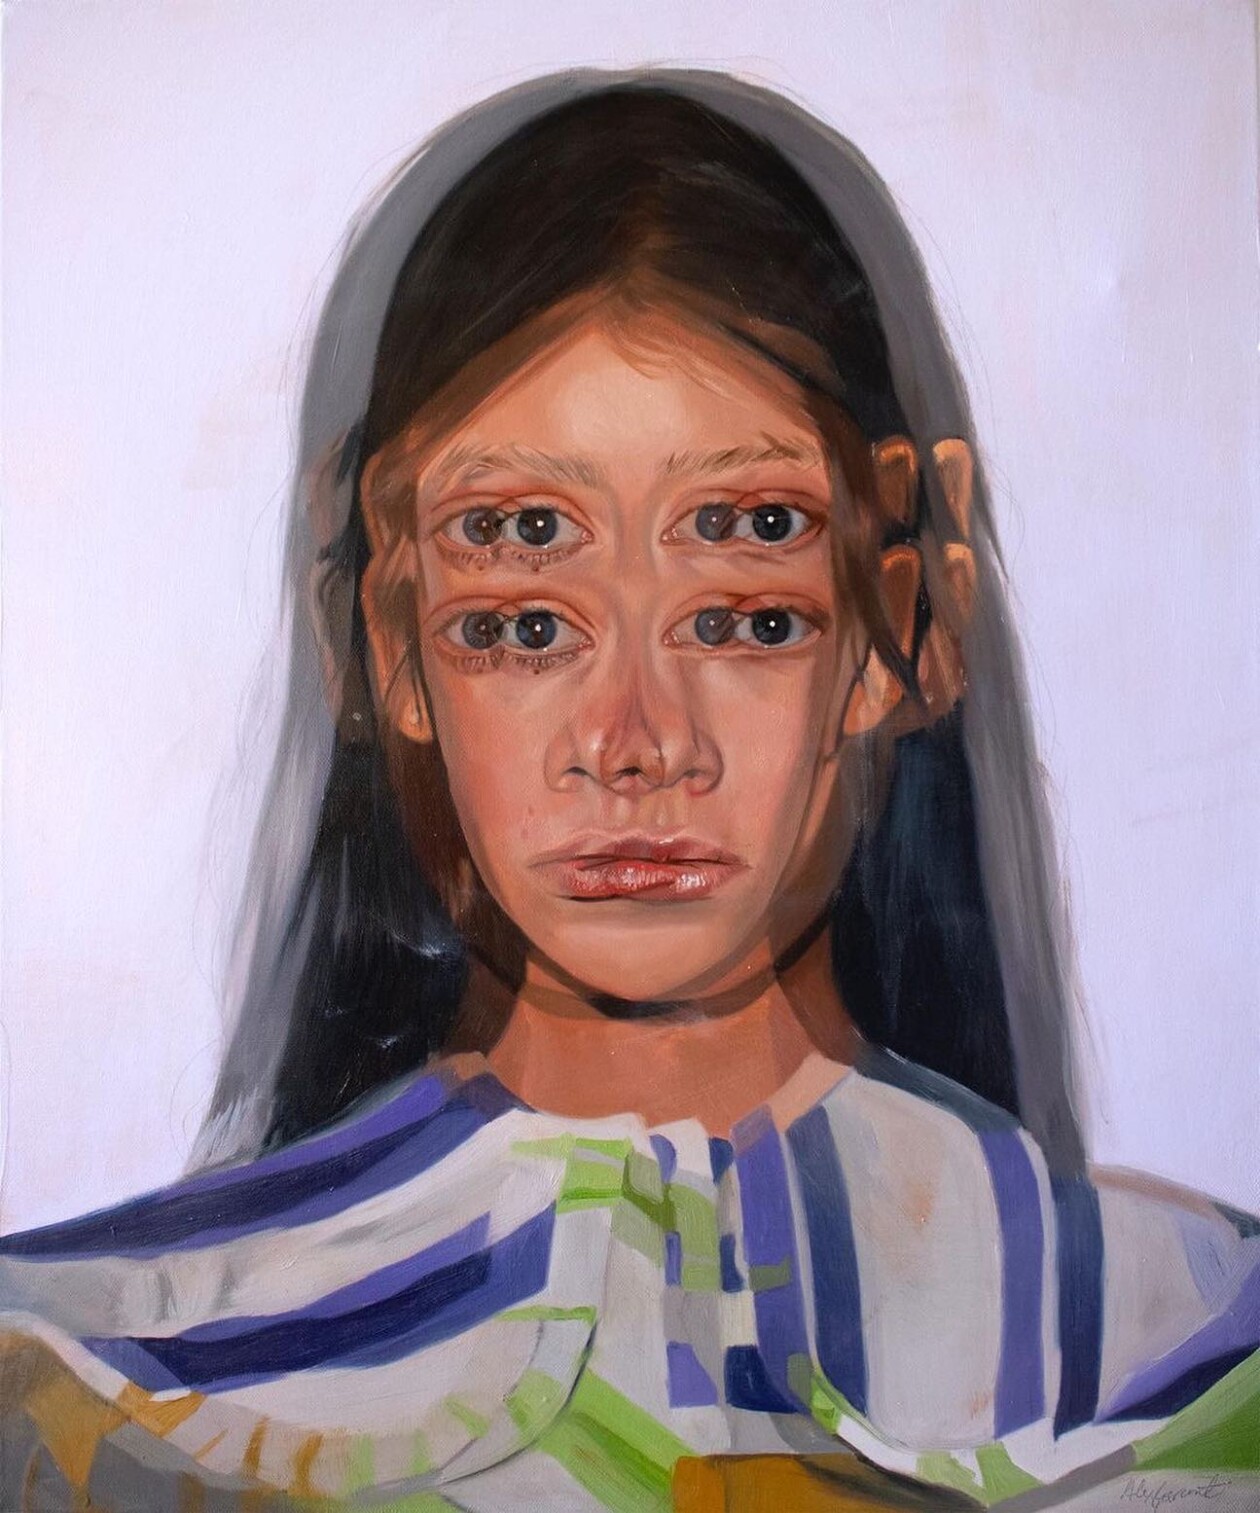 Alex Garant Overlaps Repeated Female Figures To Create Unique And Hypnotizing Portrait Paintings (1)